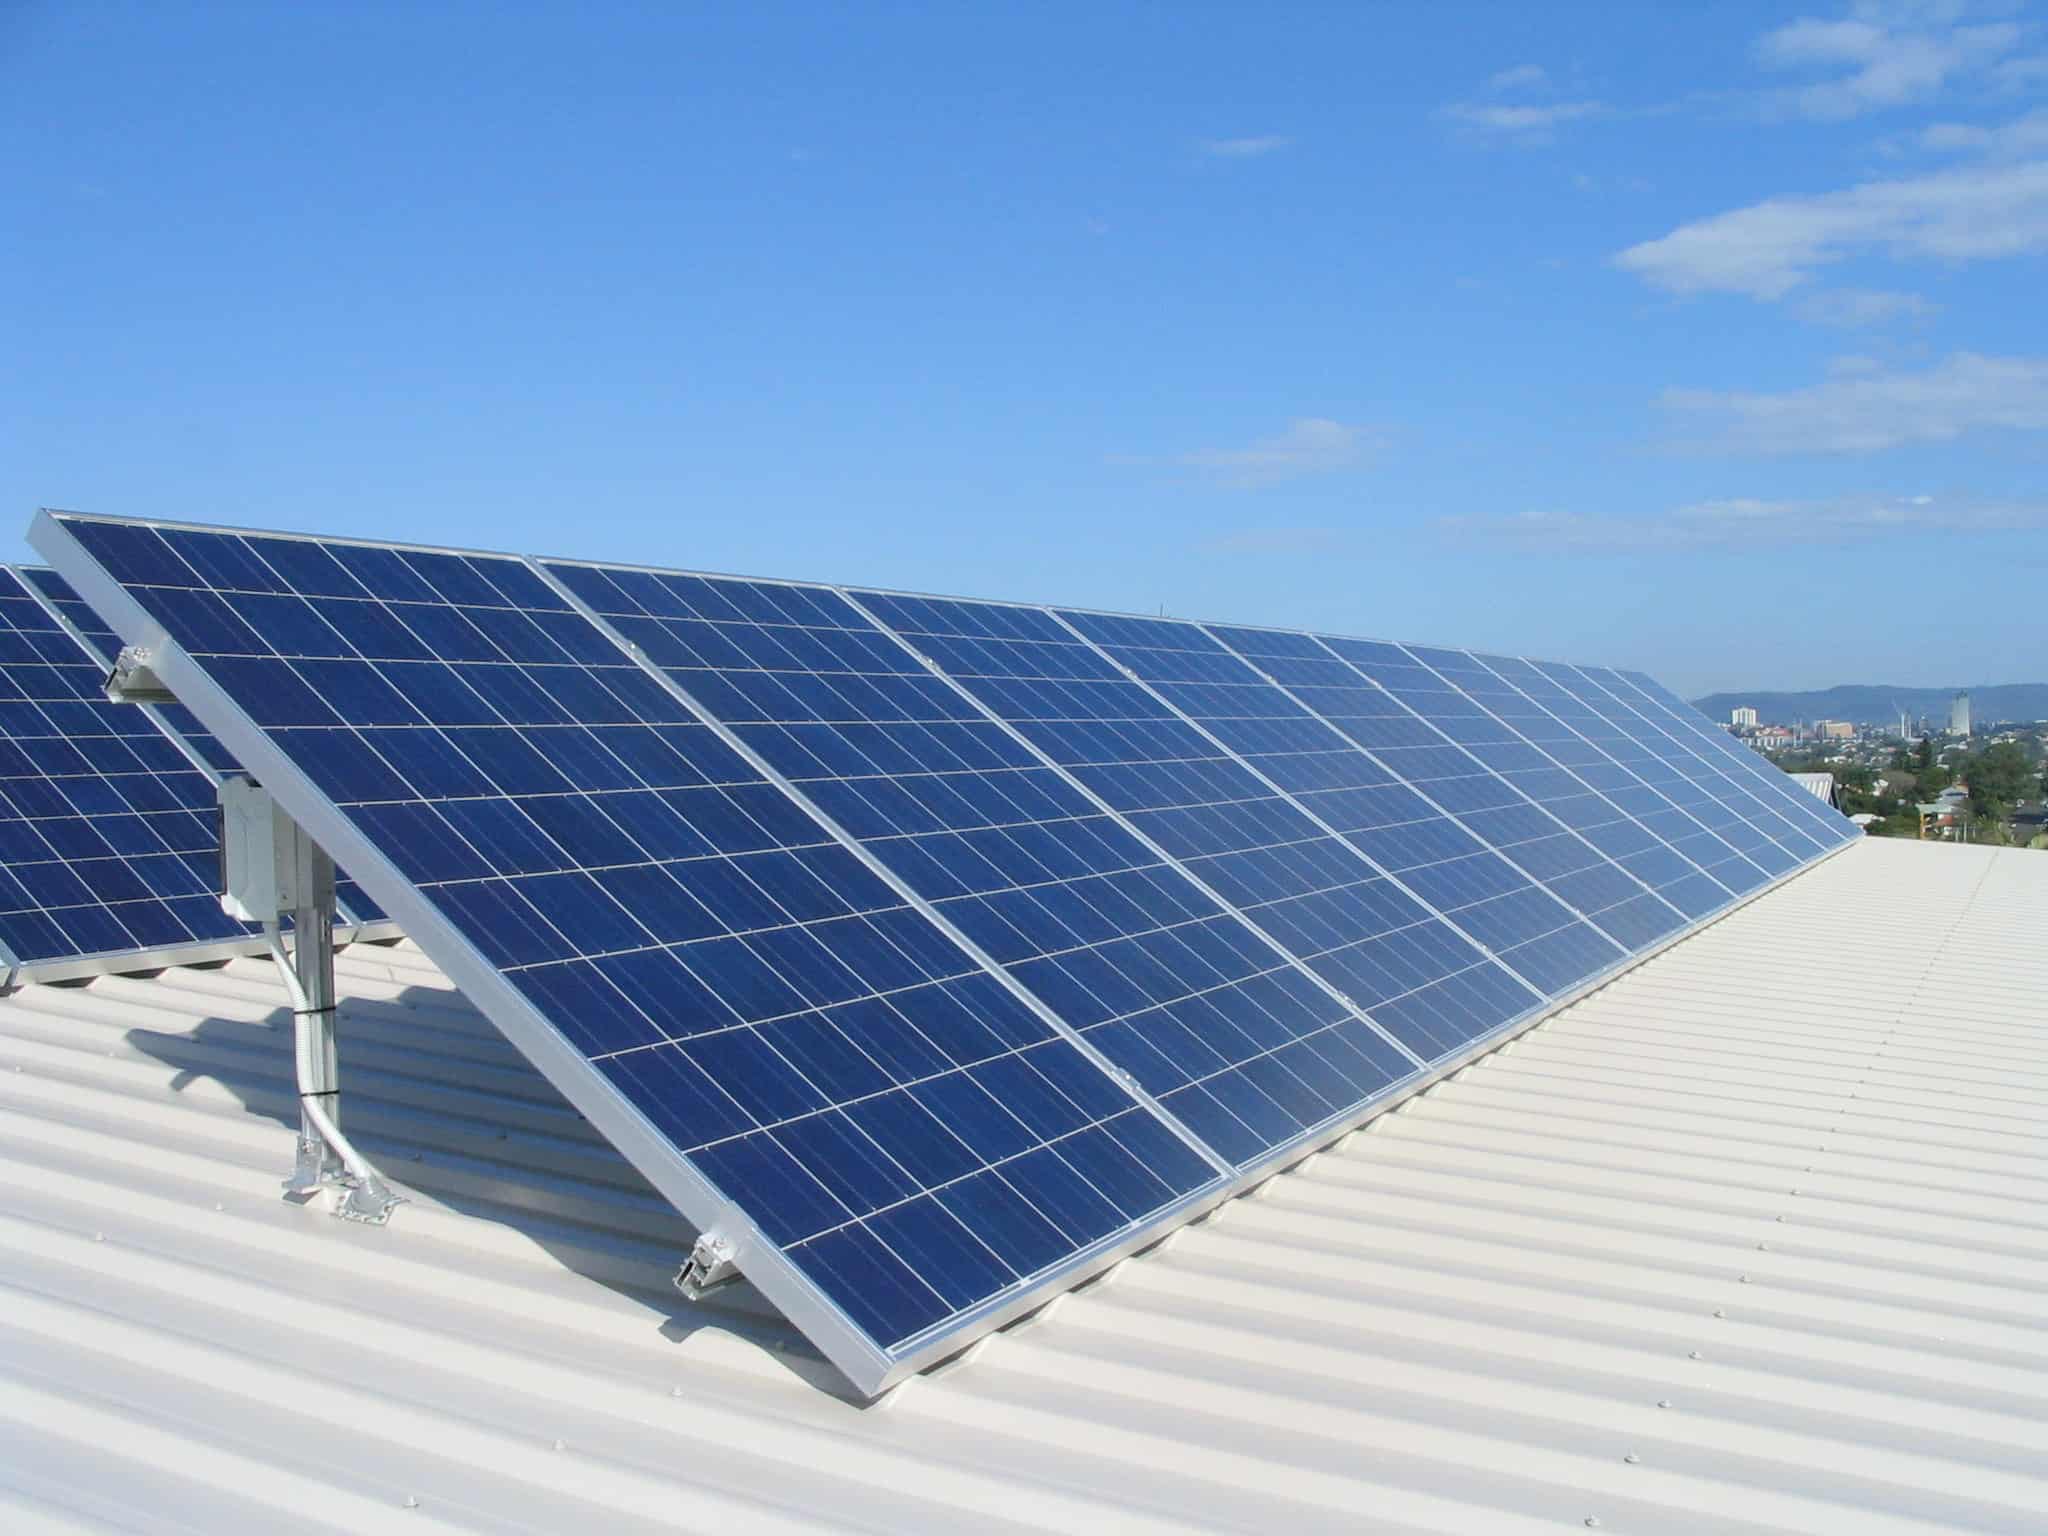 Do Solar Panels work on Heat or Light?